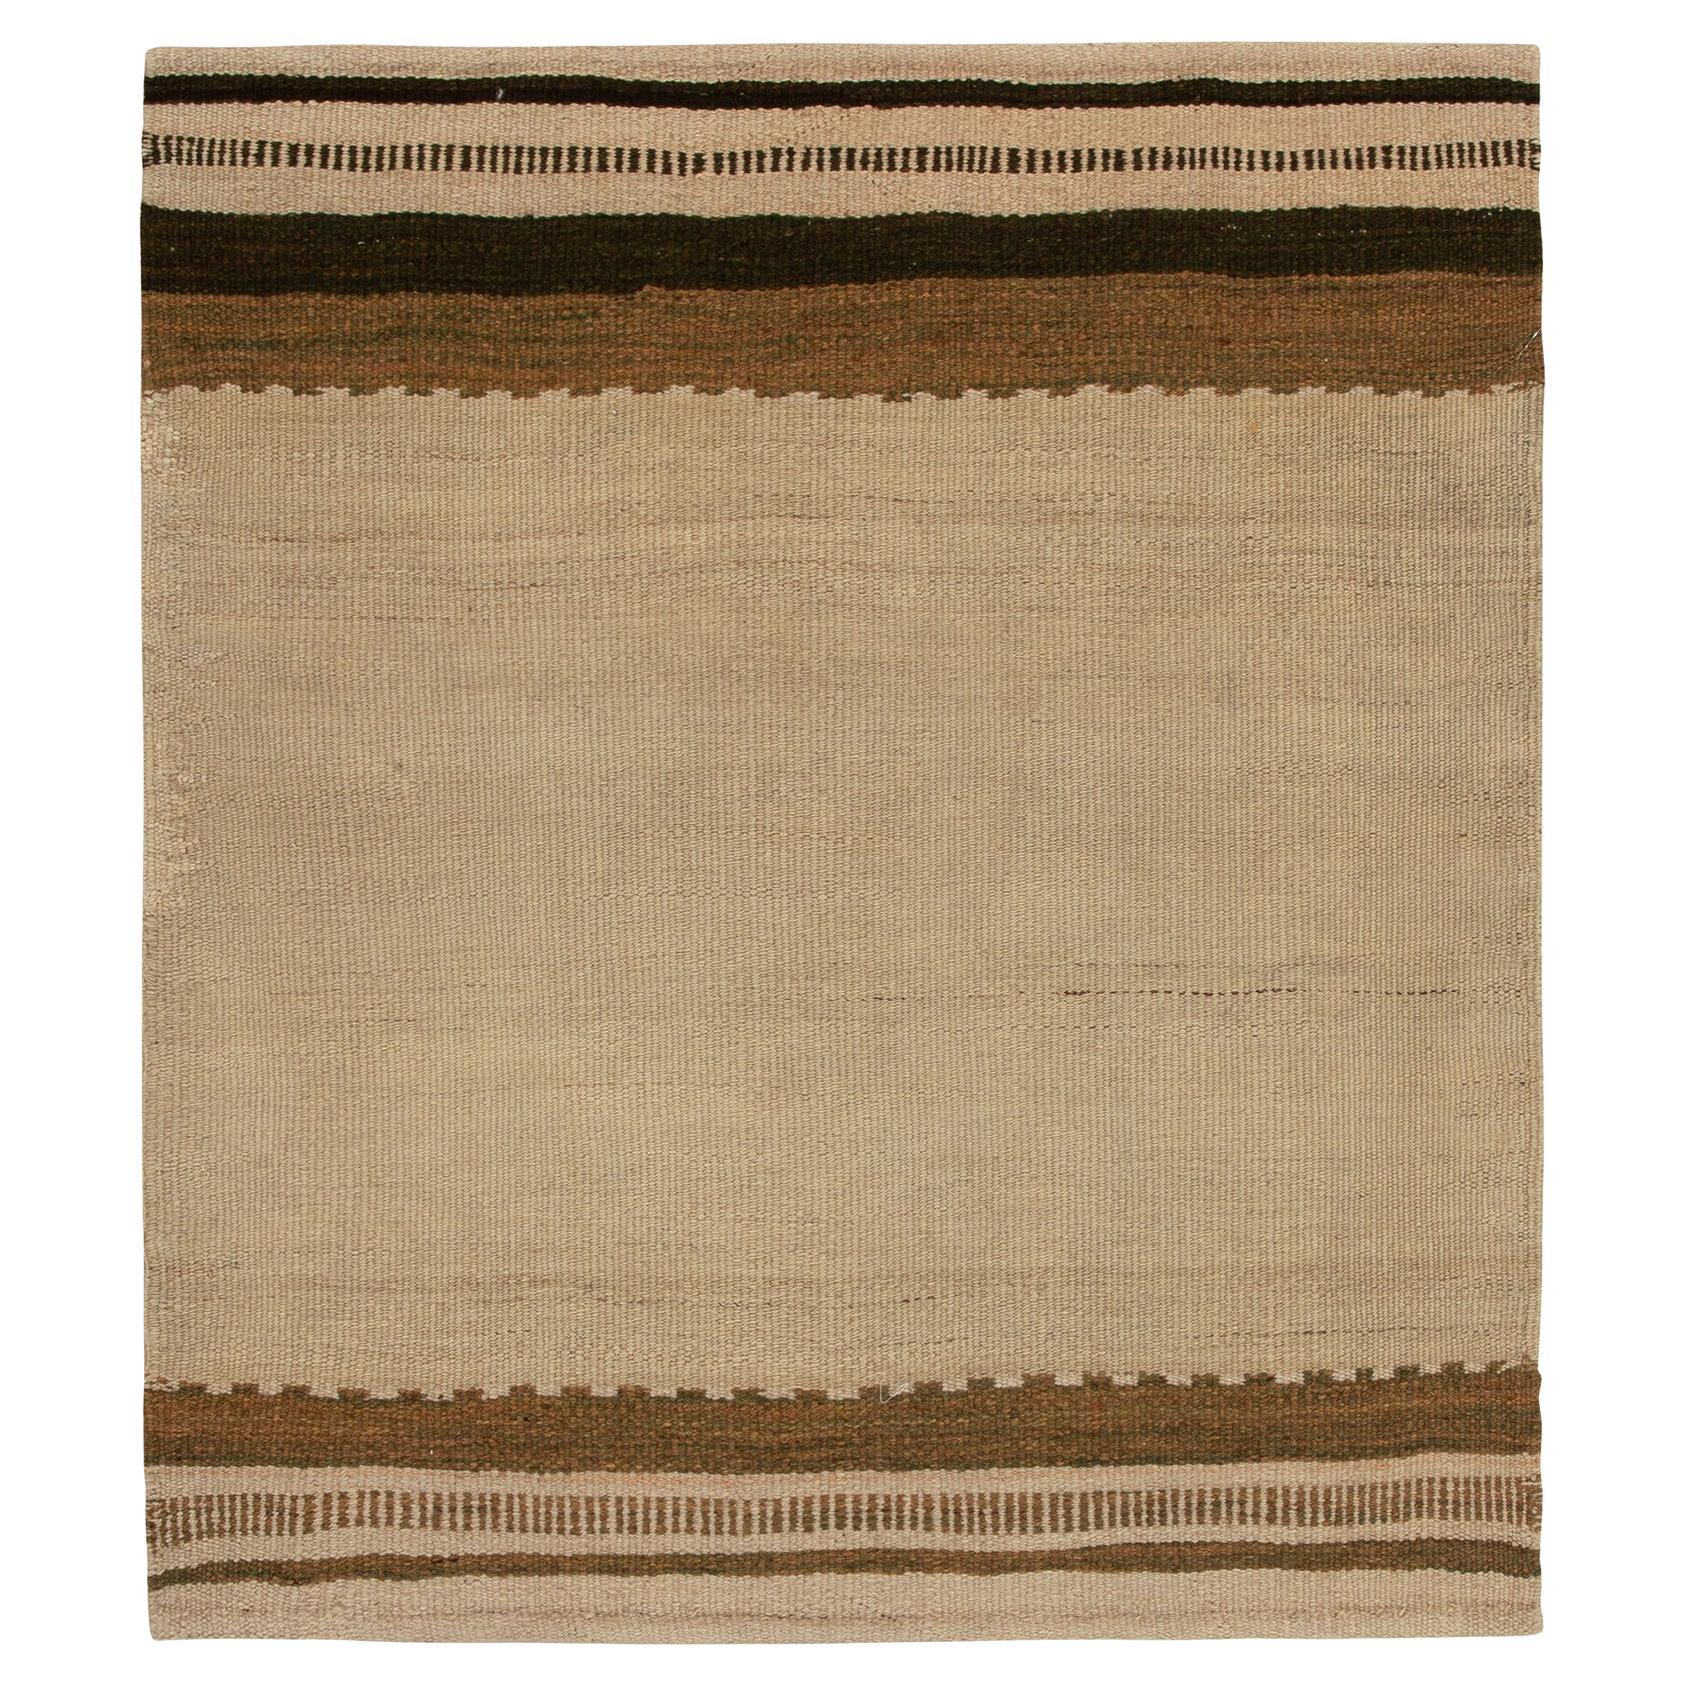 1980s Vintage Kilim Sofreh rug in Beige-Brown Striped Border by Rug & Kilim For Sale